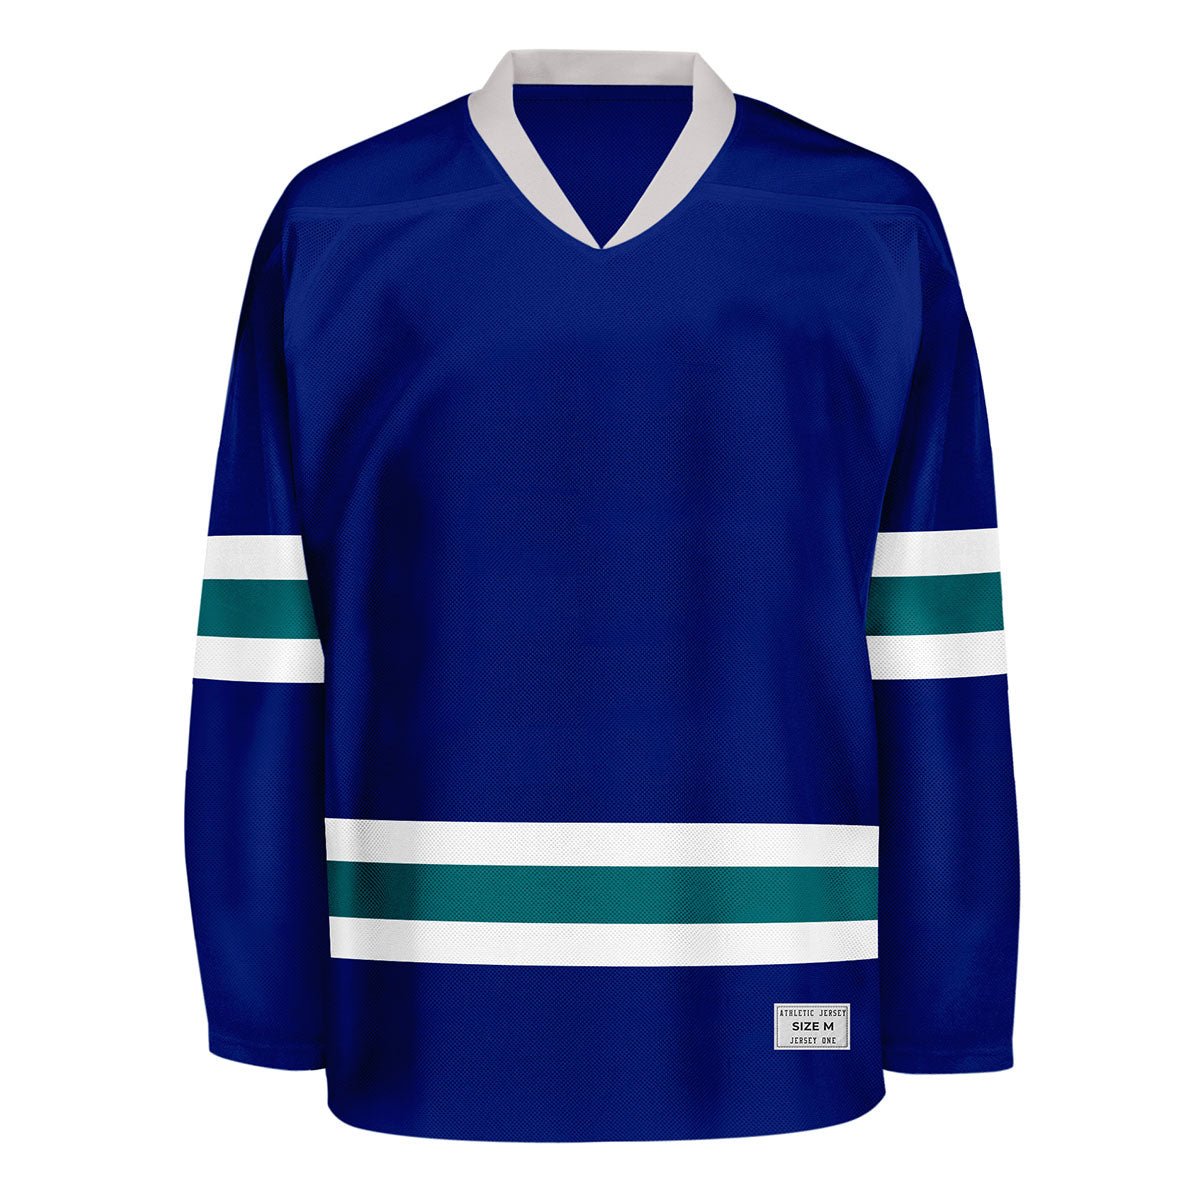 Blank Blue Hockey Jersey - Team Uniform